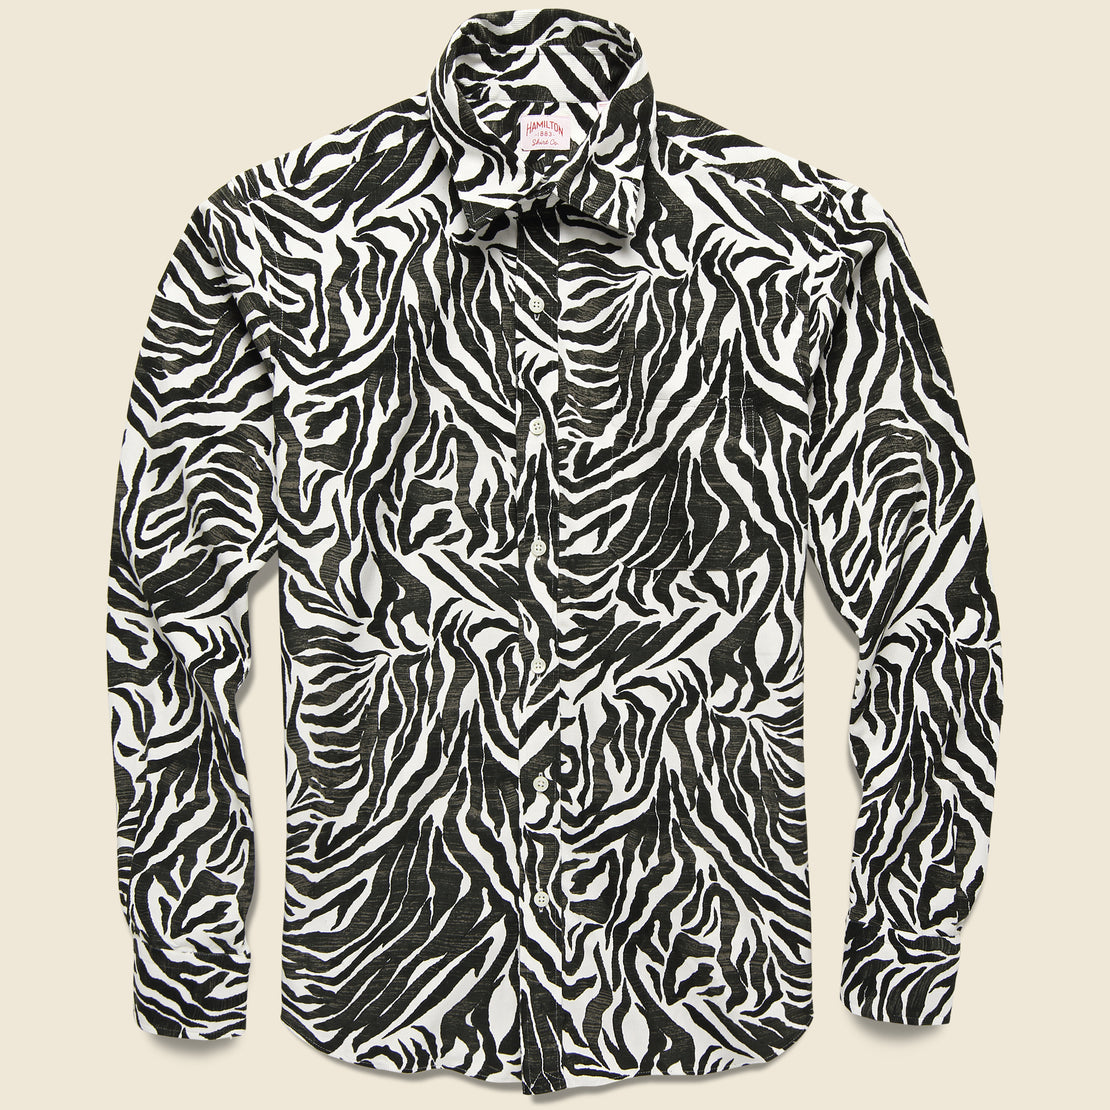 Hamilton Shirt Co. Zebra Corduroy Shirt - Black/White